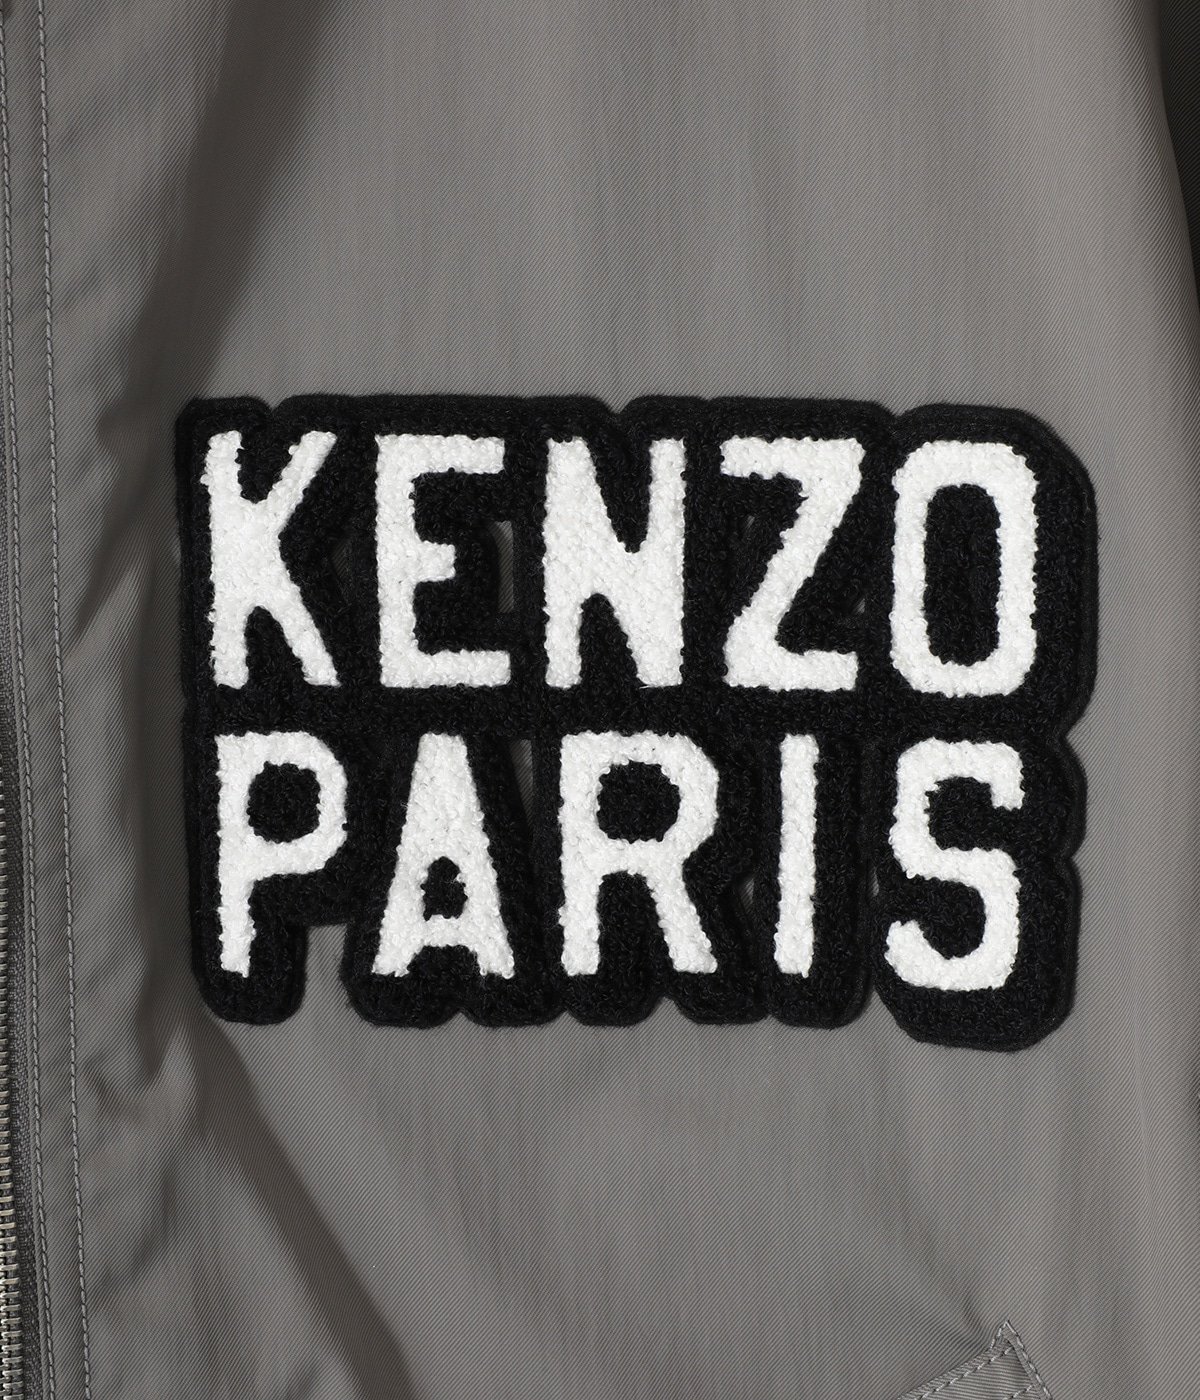 KEN ZO ELEVATED FLIGHT BOMBER | KENZO(ケンゾー) / アウター 